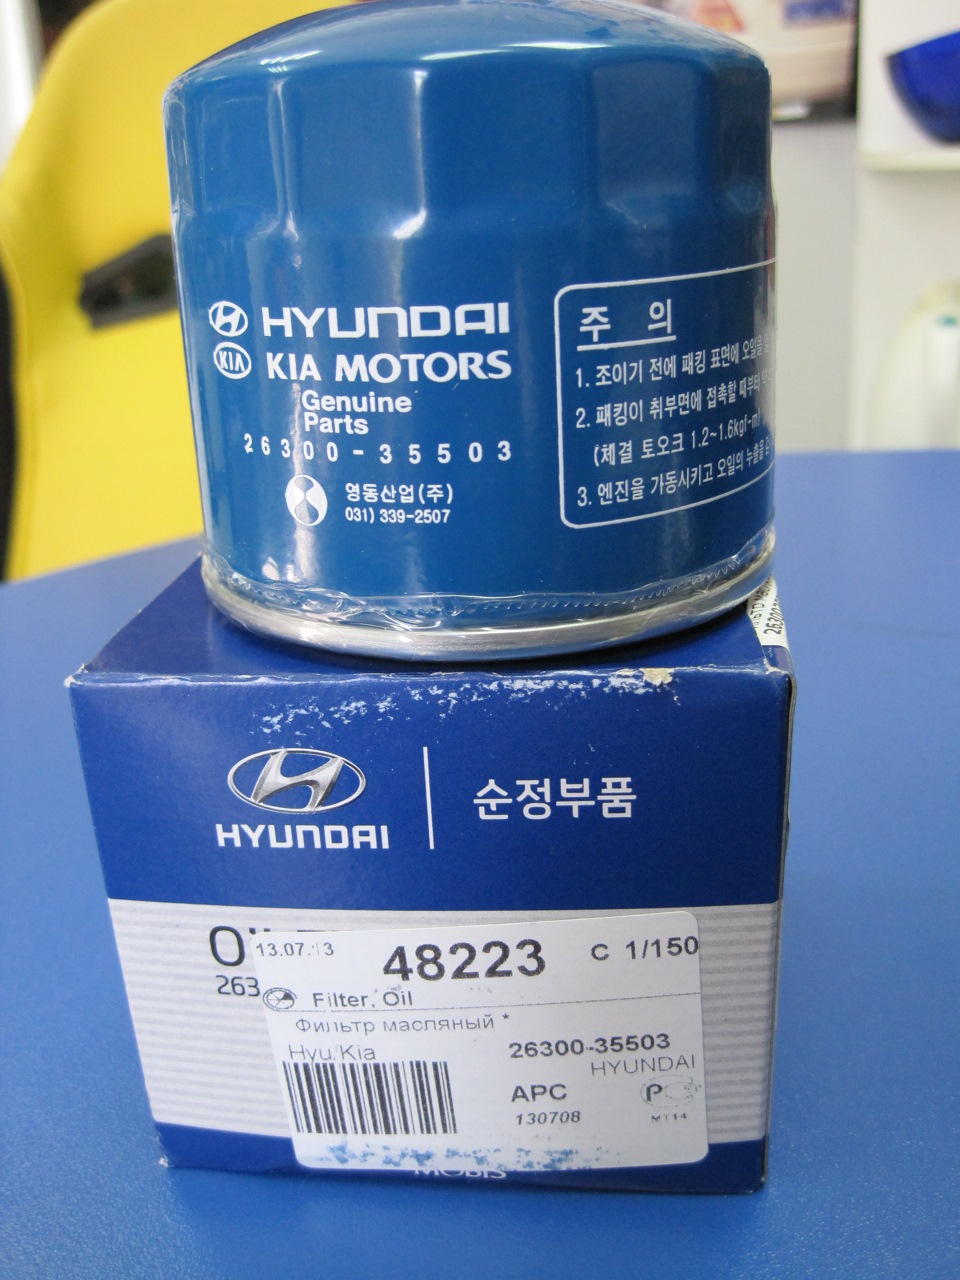 Фильтр масла рио. Hyundai Kia 2630035503 фильтр масляный. Фильтр масляный Киа Рио 1.6 2013. Фильтр масляный Киа Рио 1.6 2015. Масляный фильтр Киа Рио 4 1.6.